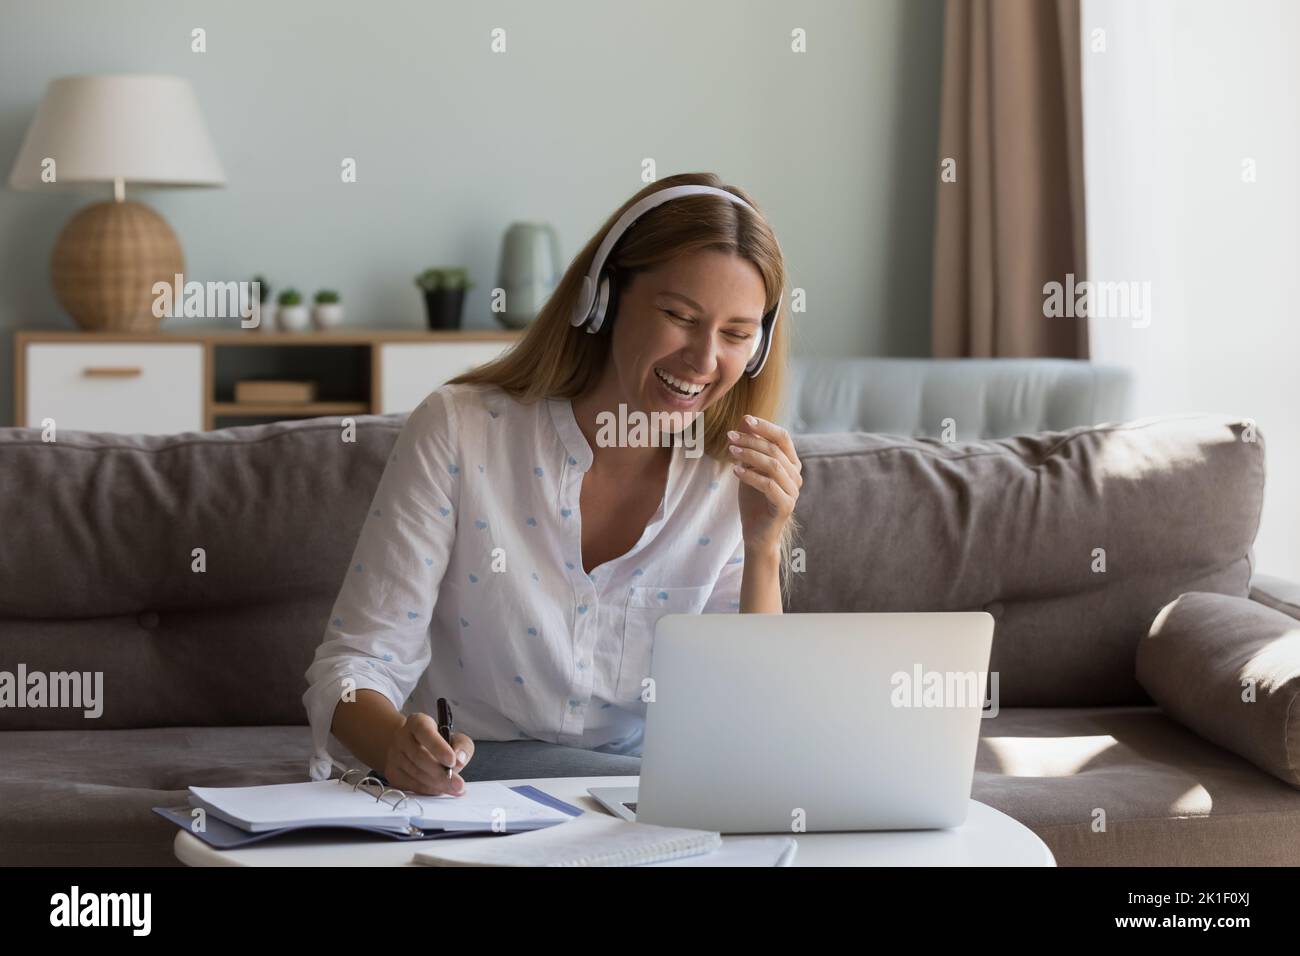 Happy joyful woman in wireless headphones talking on video call Stock Photo